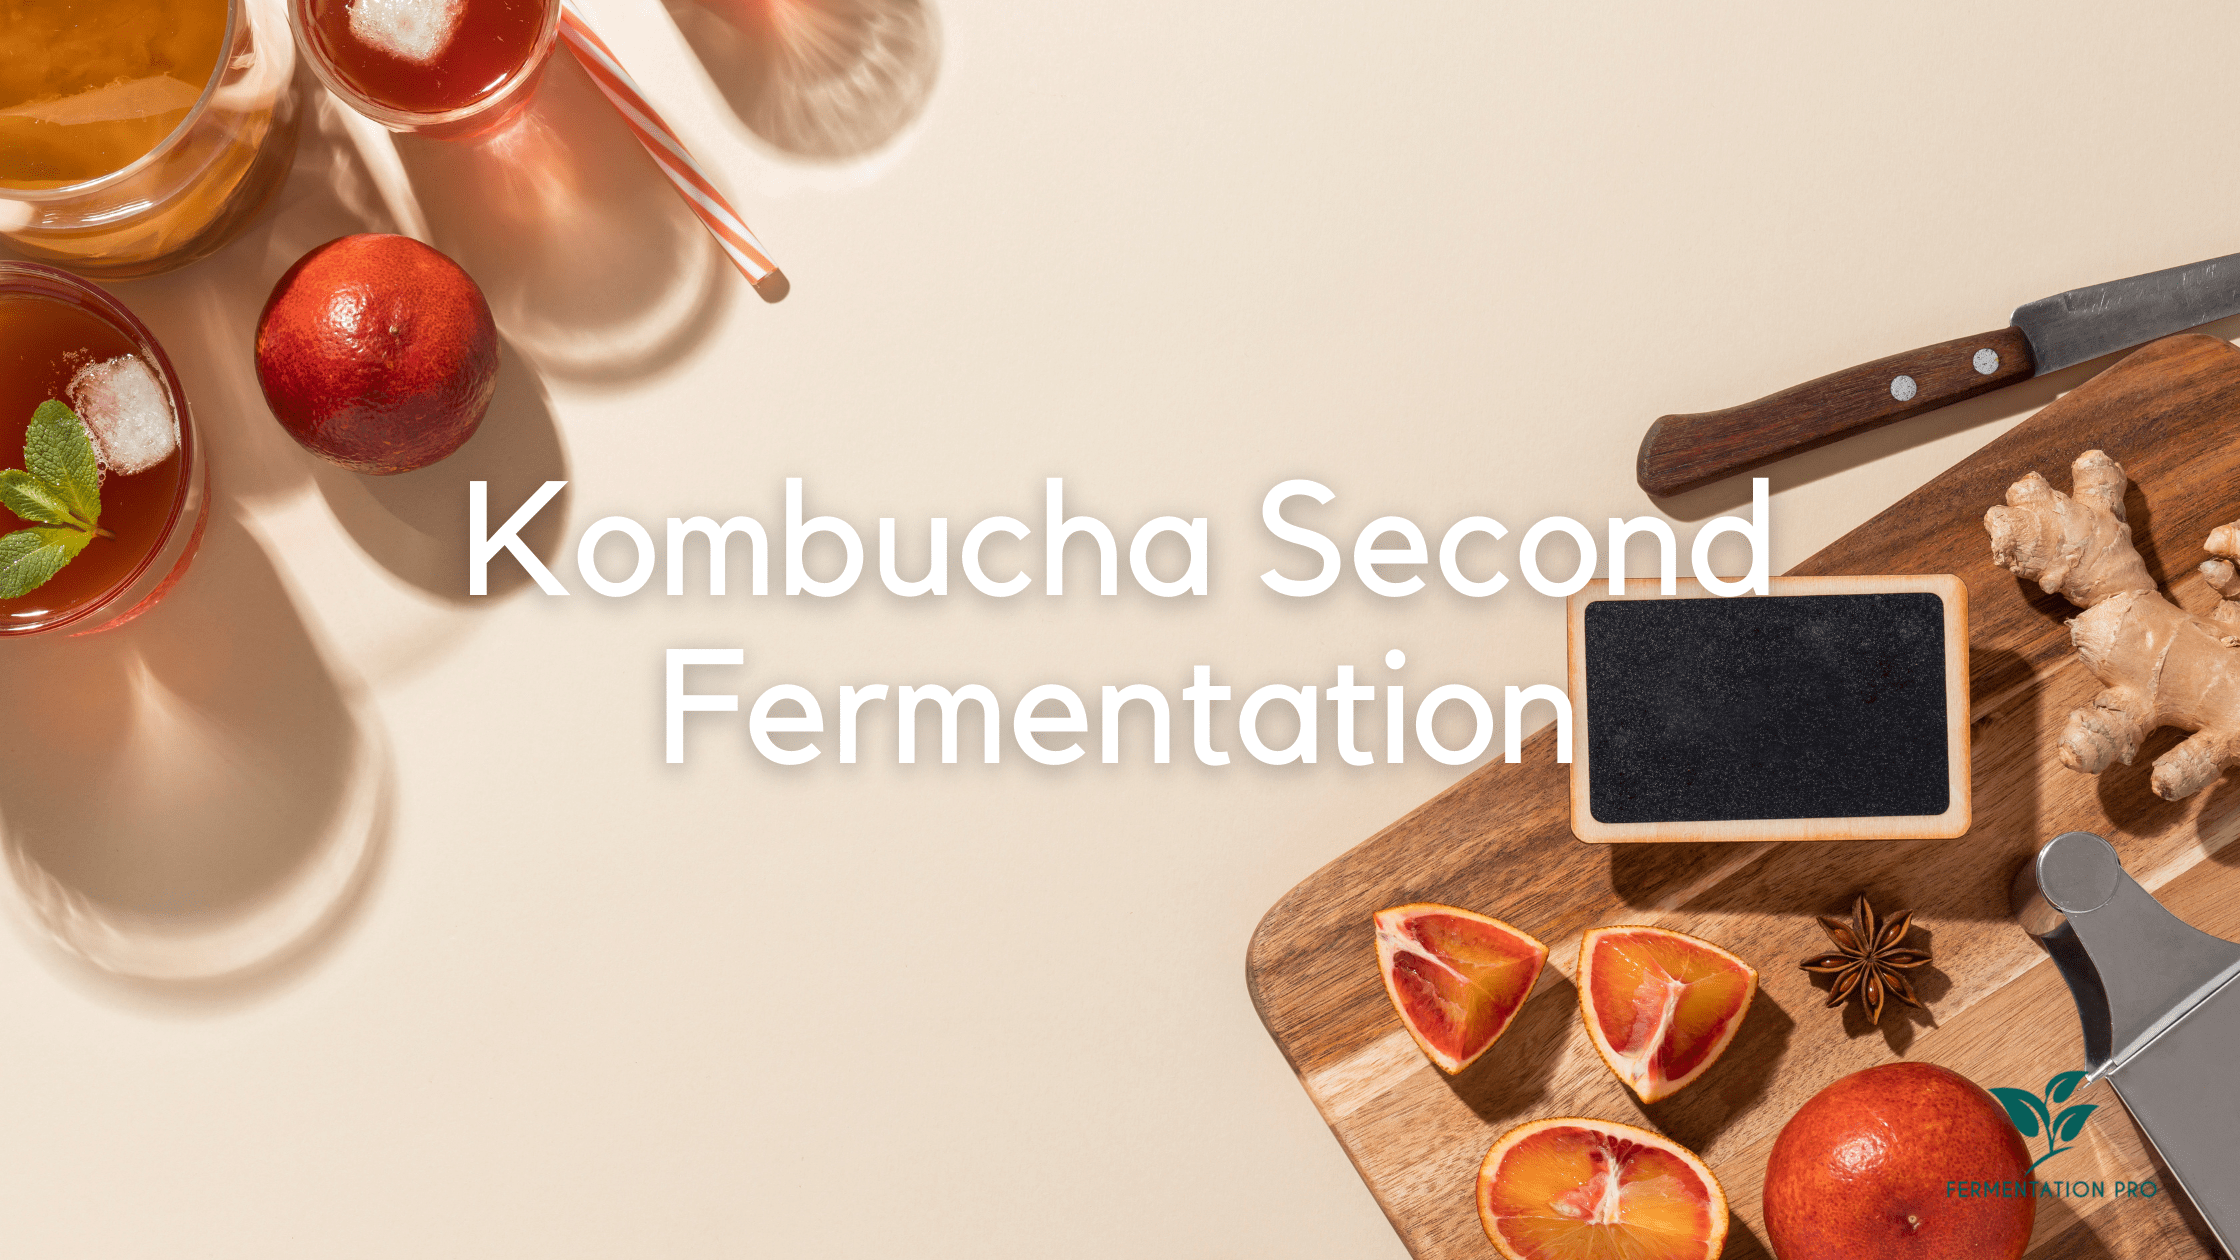 Kombucha Second Fermentation - Fermentation Pro